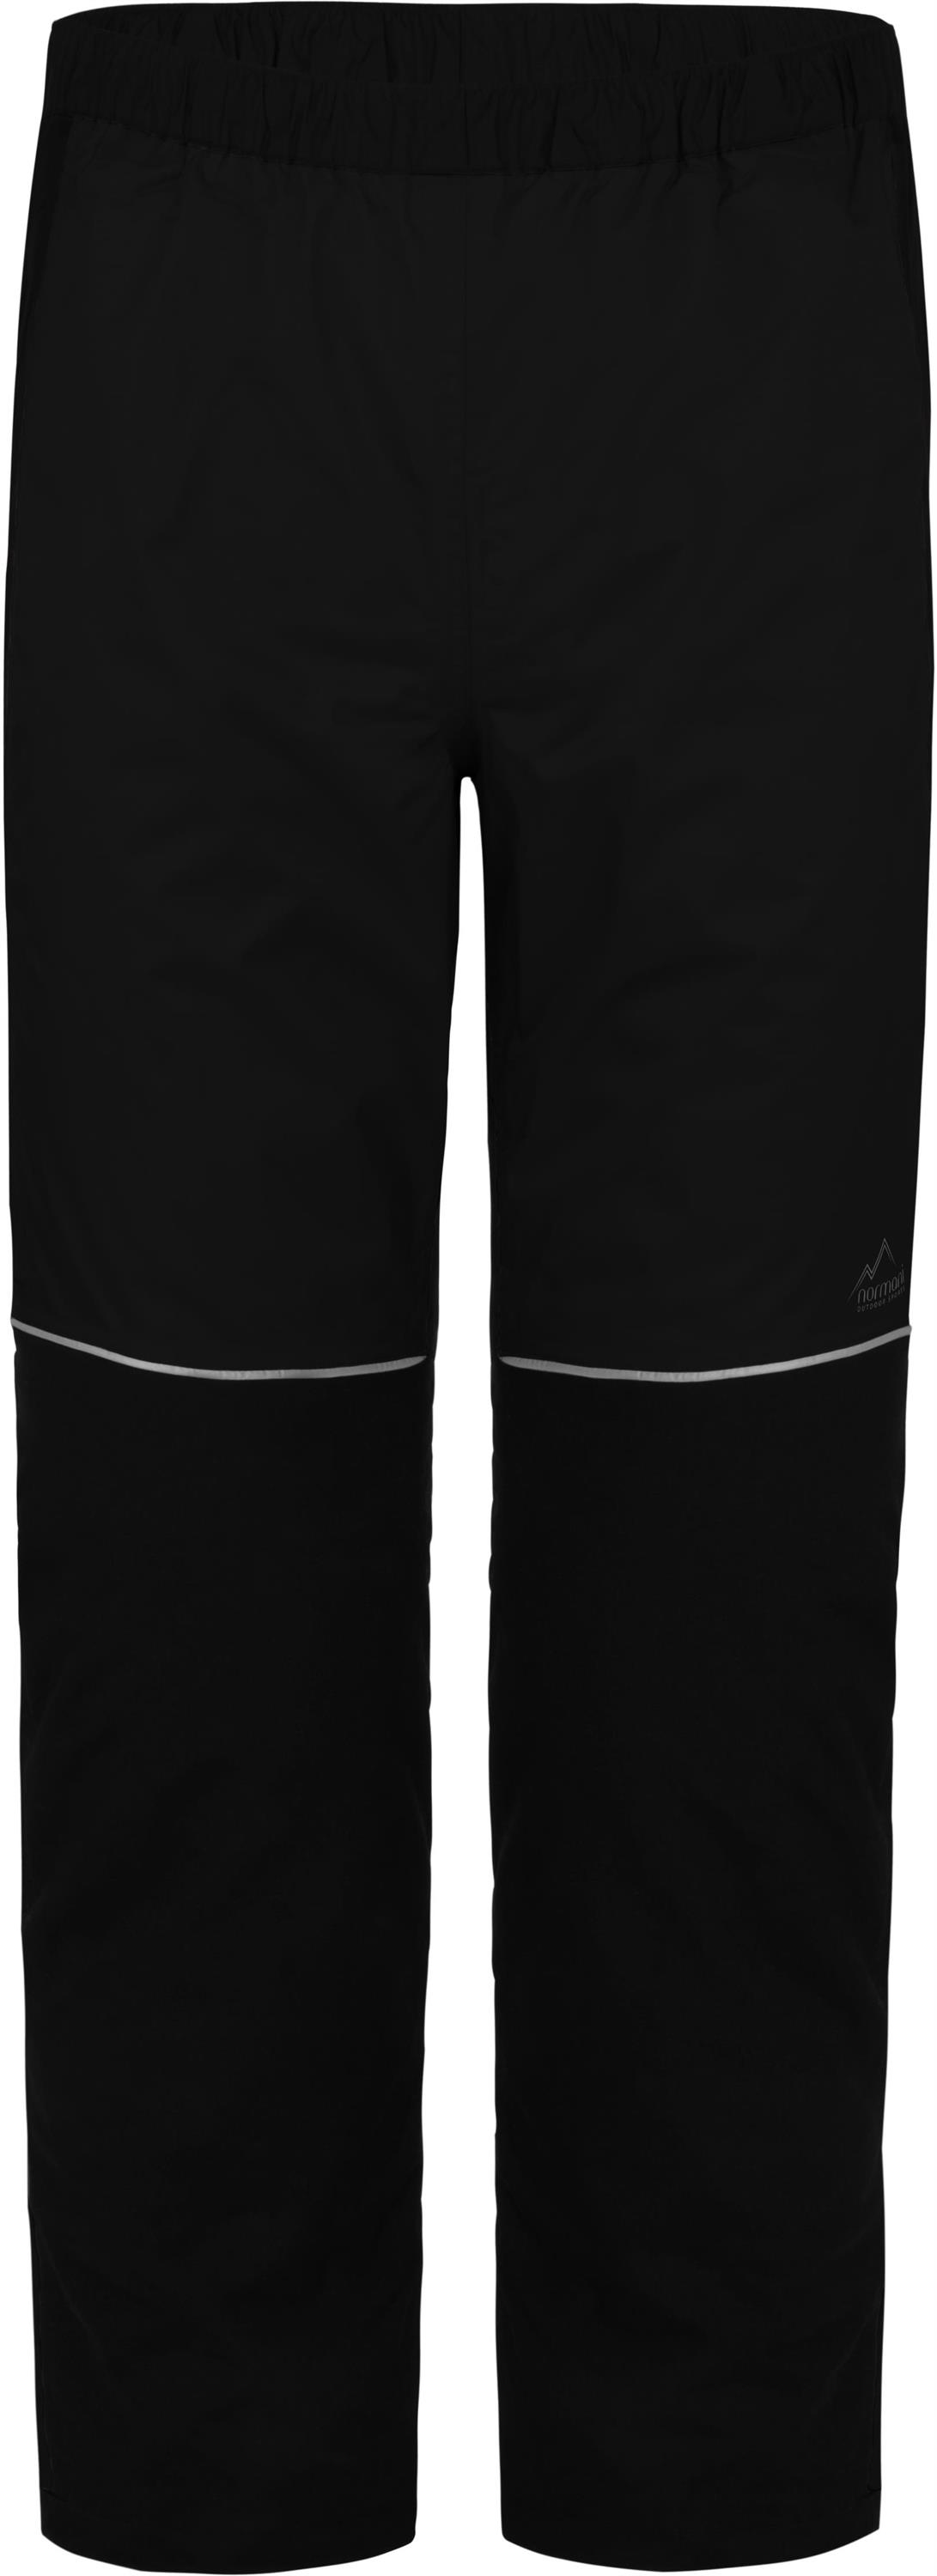 Водонепроницаемые брюки Normani Outdoor Sports Kinder „Saanich“, черный водонепроницаемые брюки normani outdoor sports kinder „saanich“ бензиновый